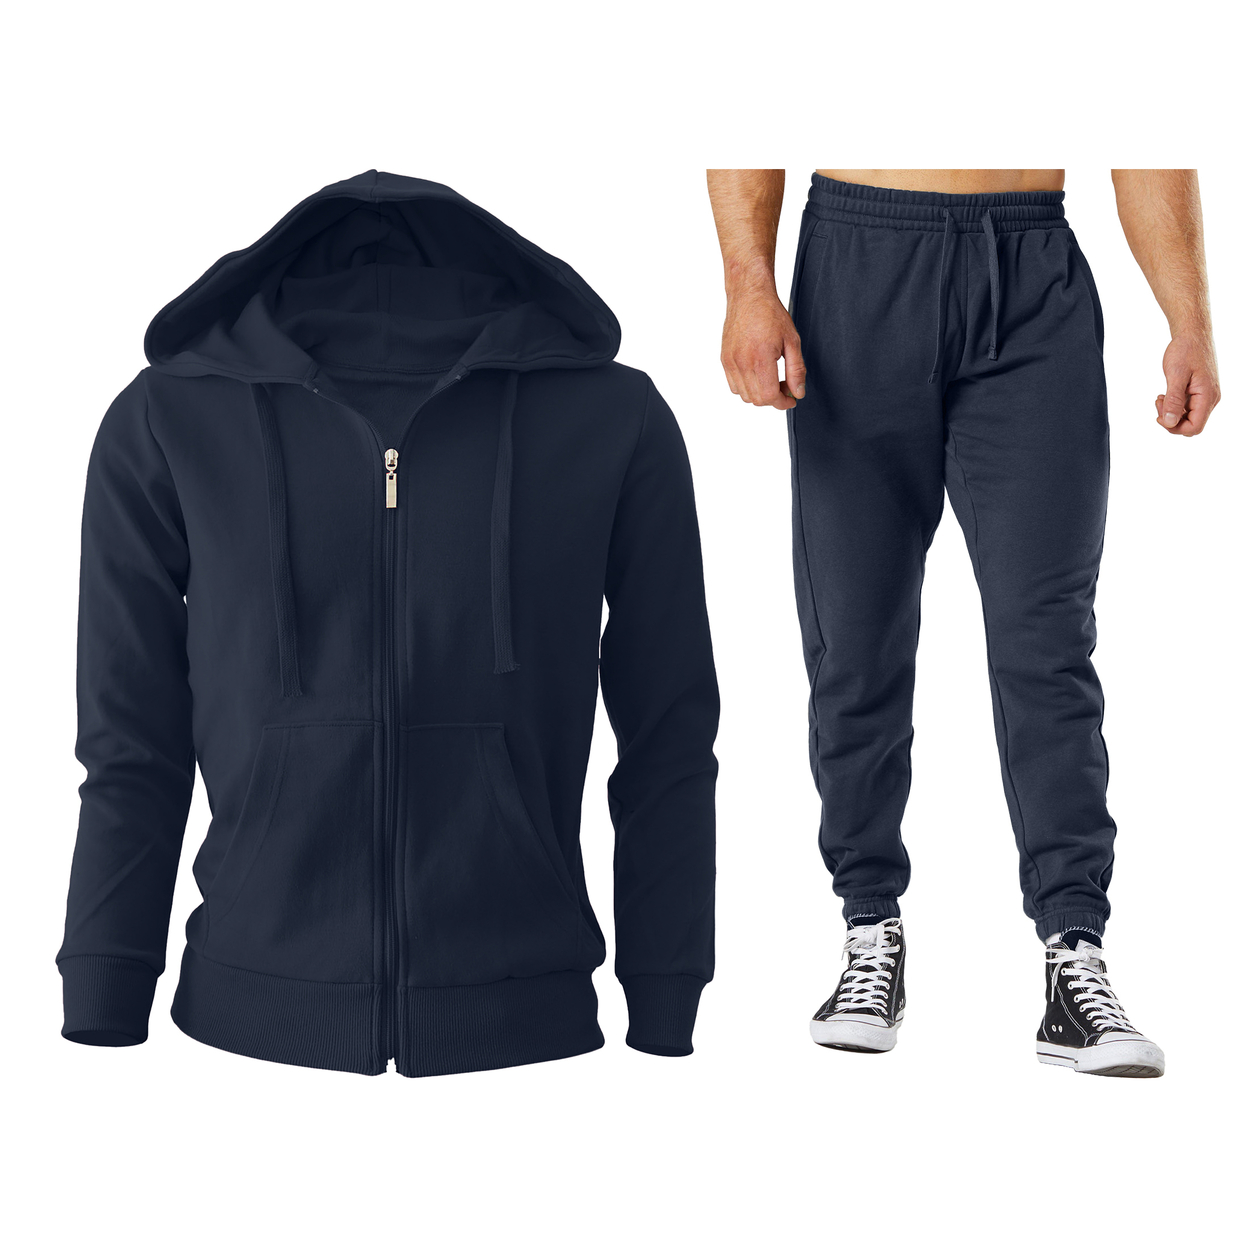 2/4-Piece: Men's Winter Warm Cozy Athletic Multi-Pockets BIG & TALL Sweatsuit Set - Black, 1, Large